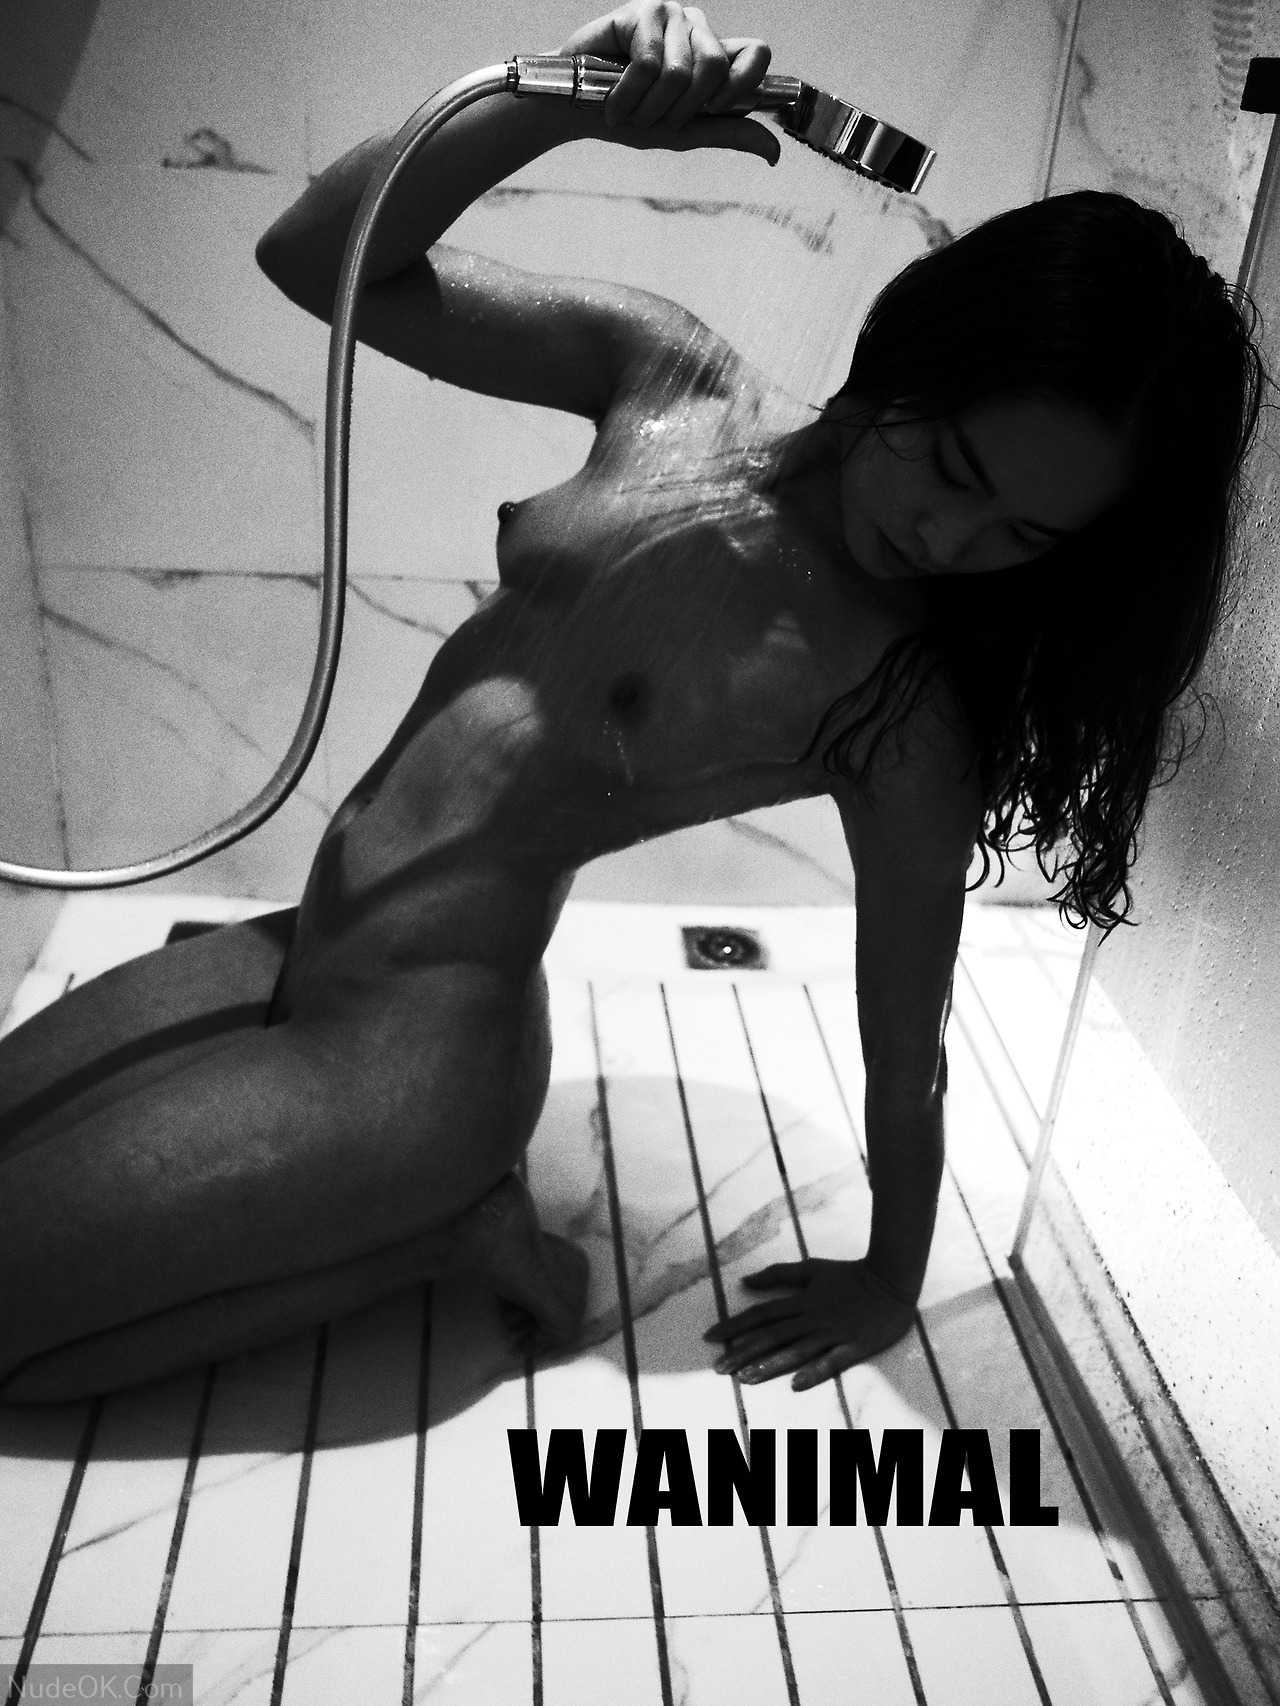 NudeOK.Com Wanimal Photo Album; Model China; Girl Chinese; Nude Pictures; Naked Sexy; NudeOK.Com - 중국 모델 누드 사진 - Wanimal 누드 - 에로틱;  